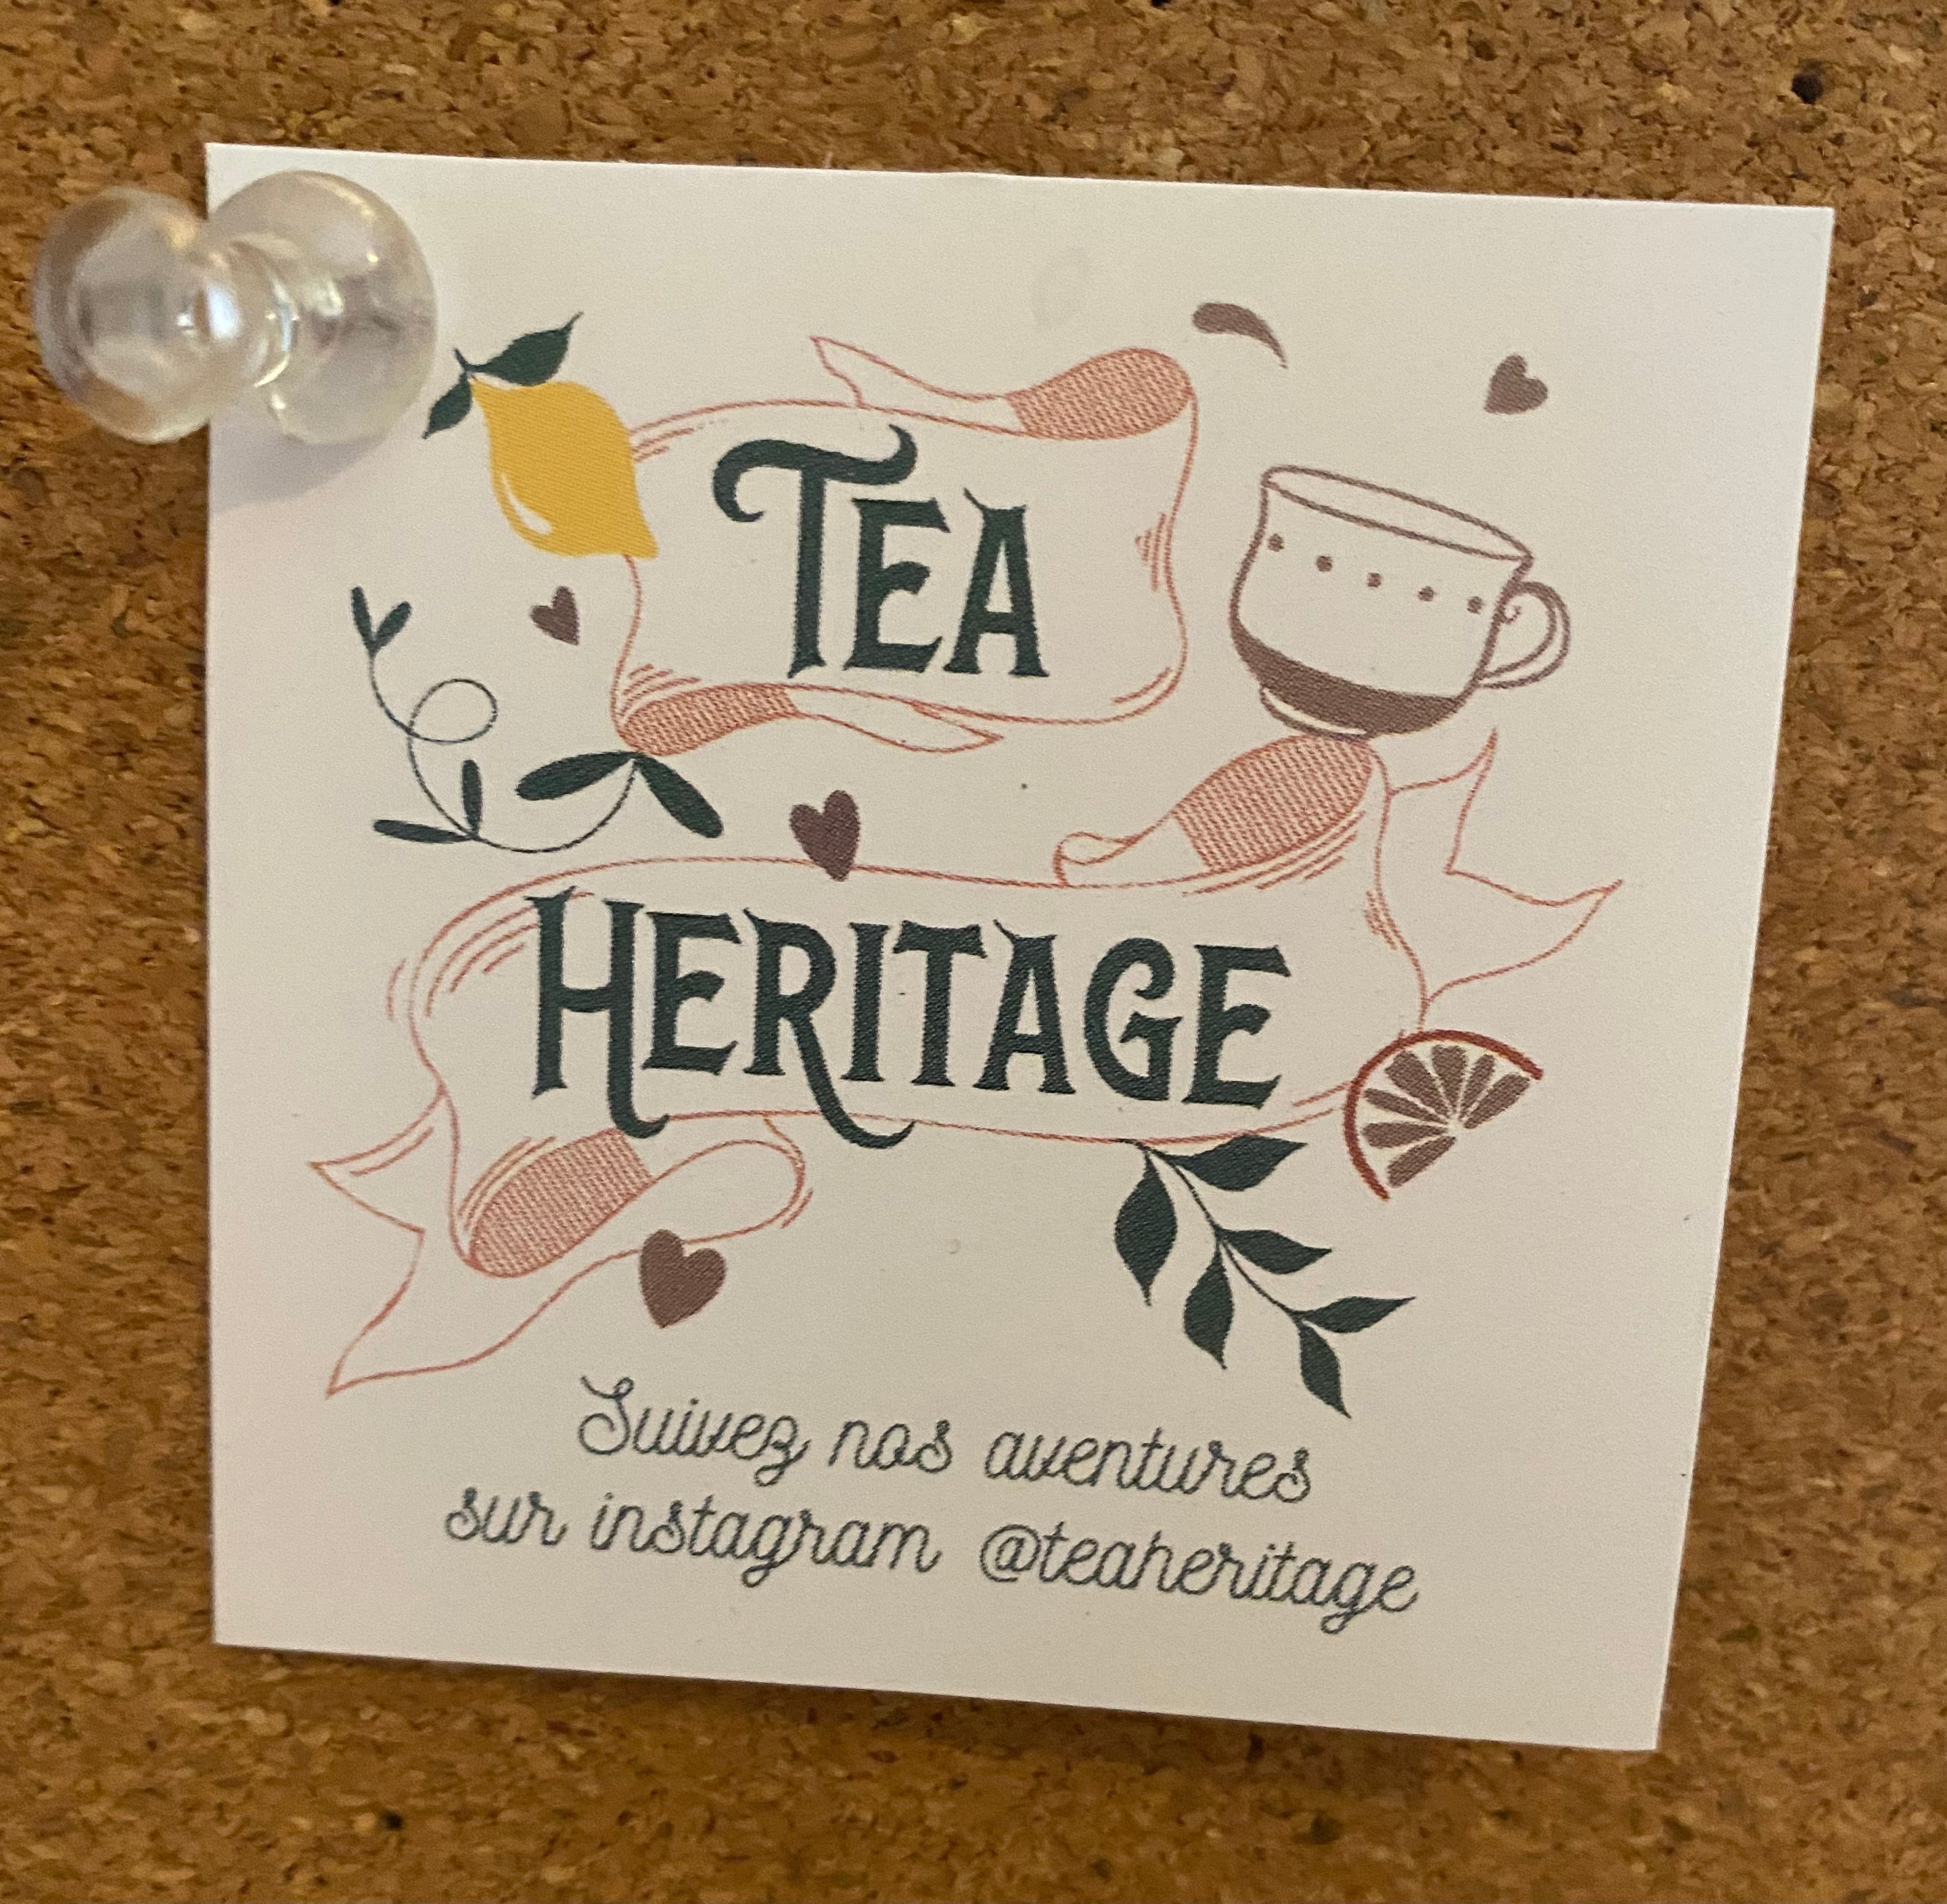 Snowman Tea Bags by Tea Heritage